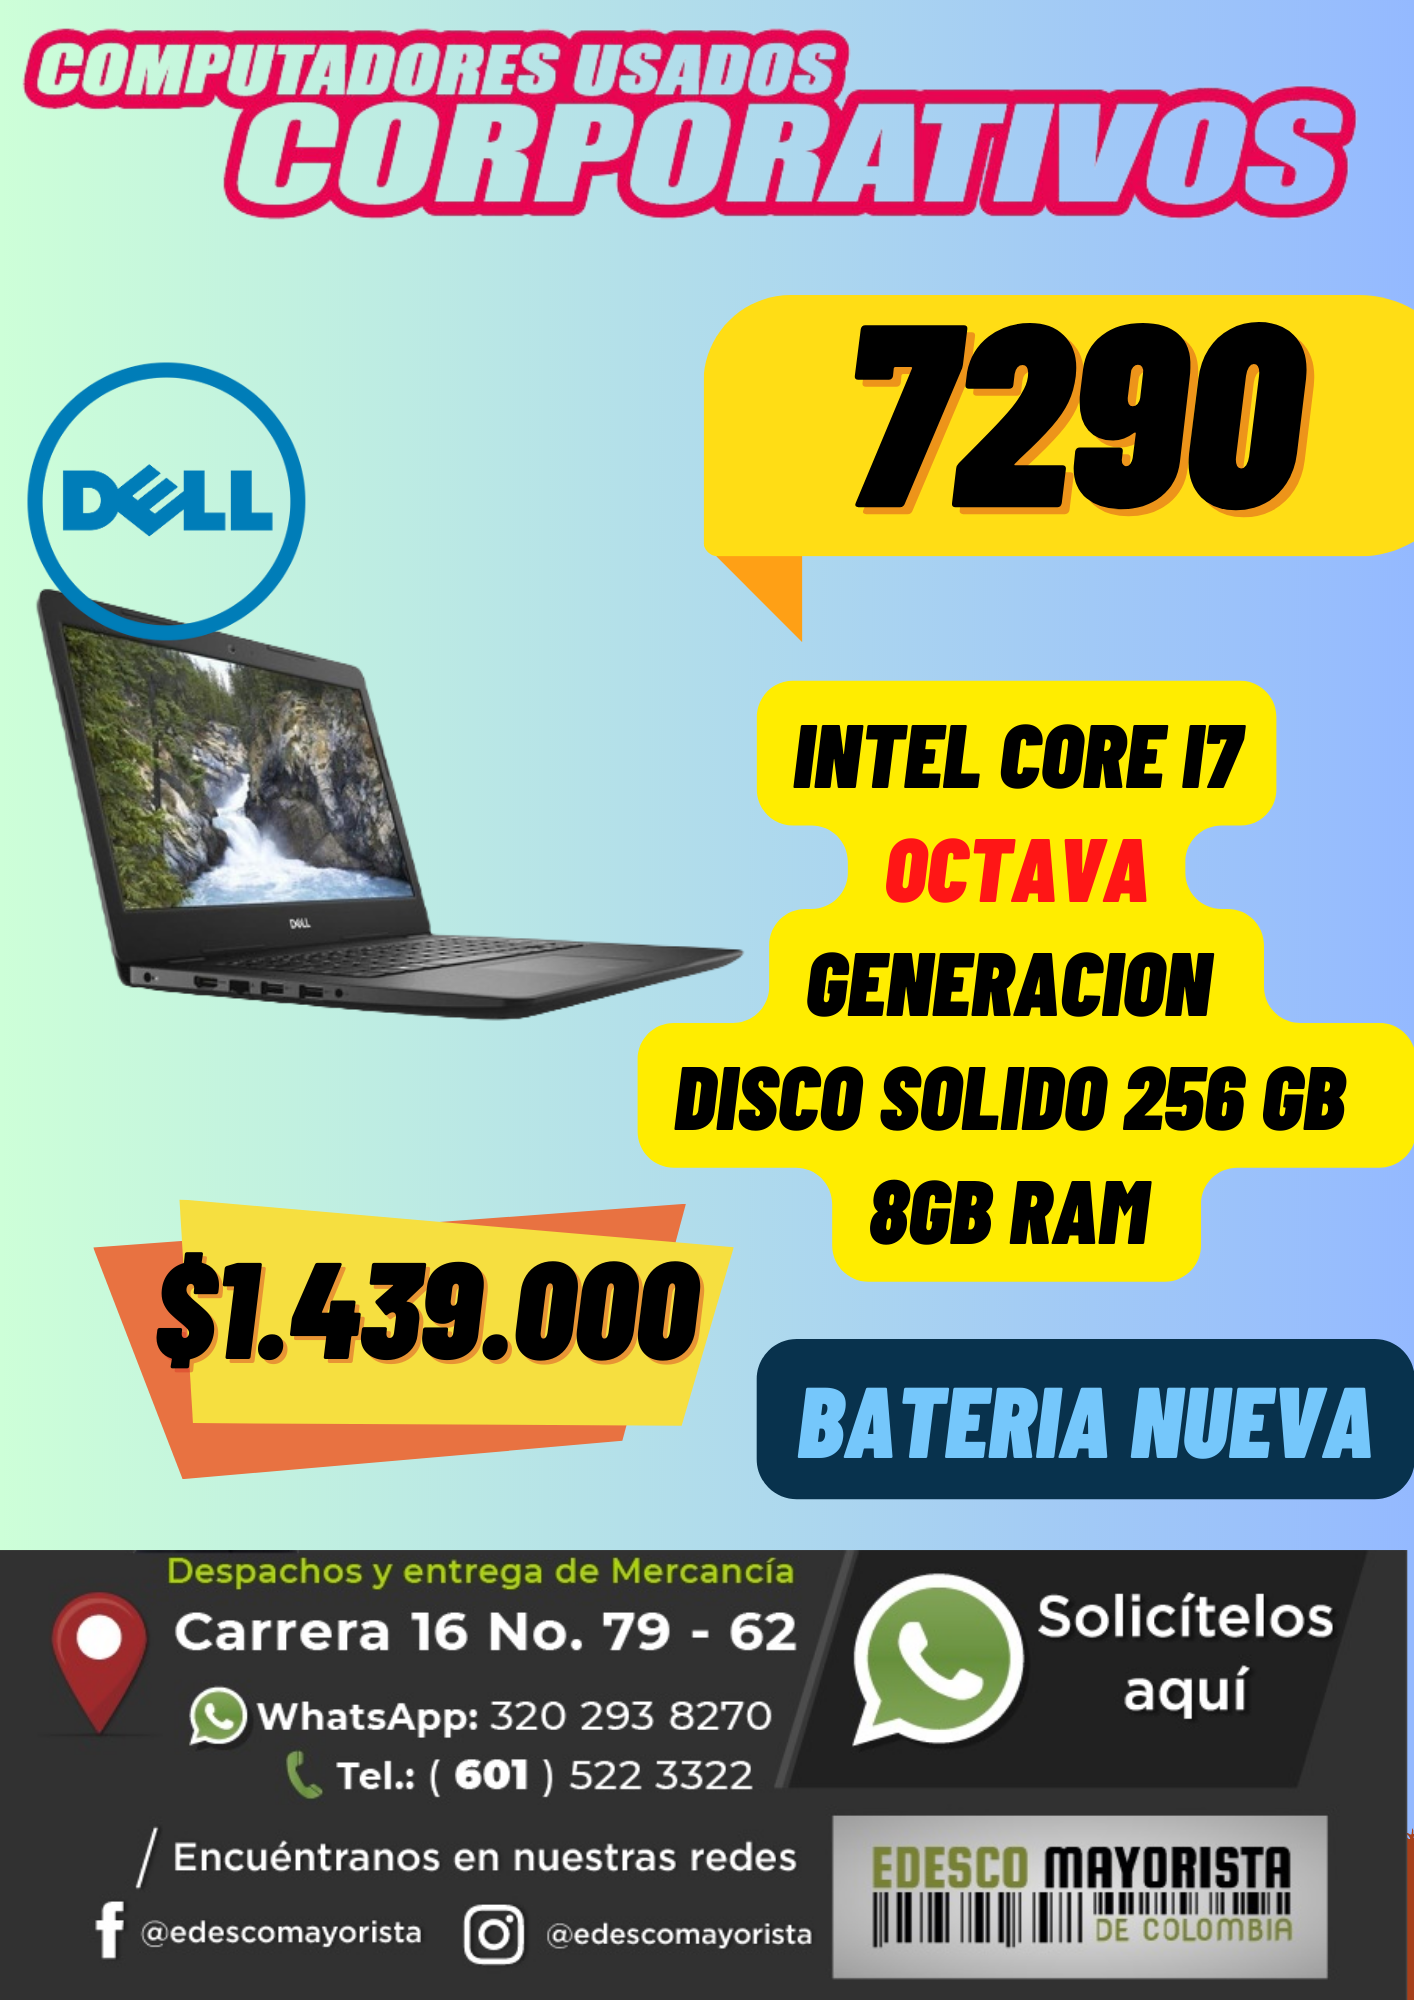 Dell 7290 i7 octava Batería nueva